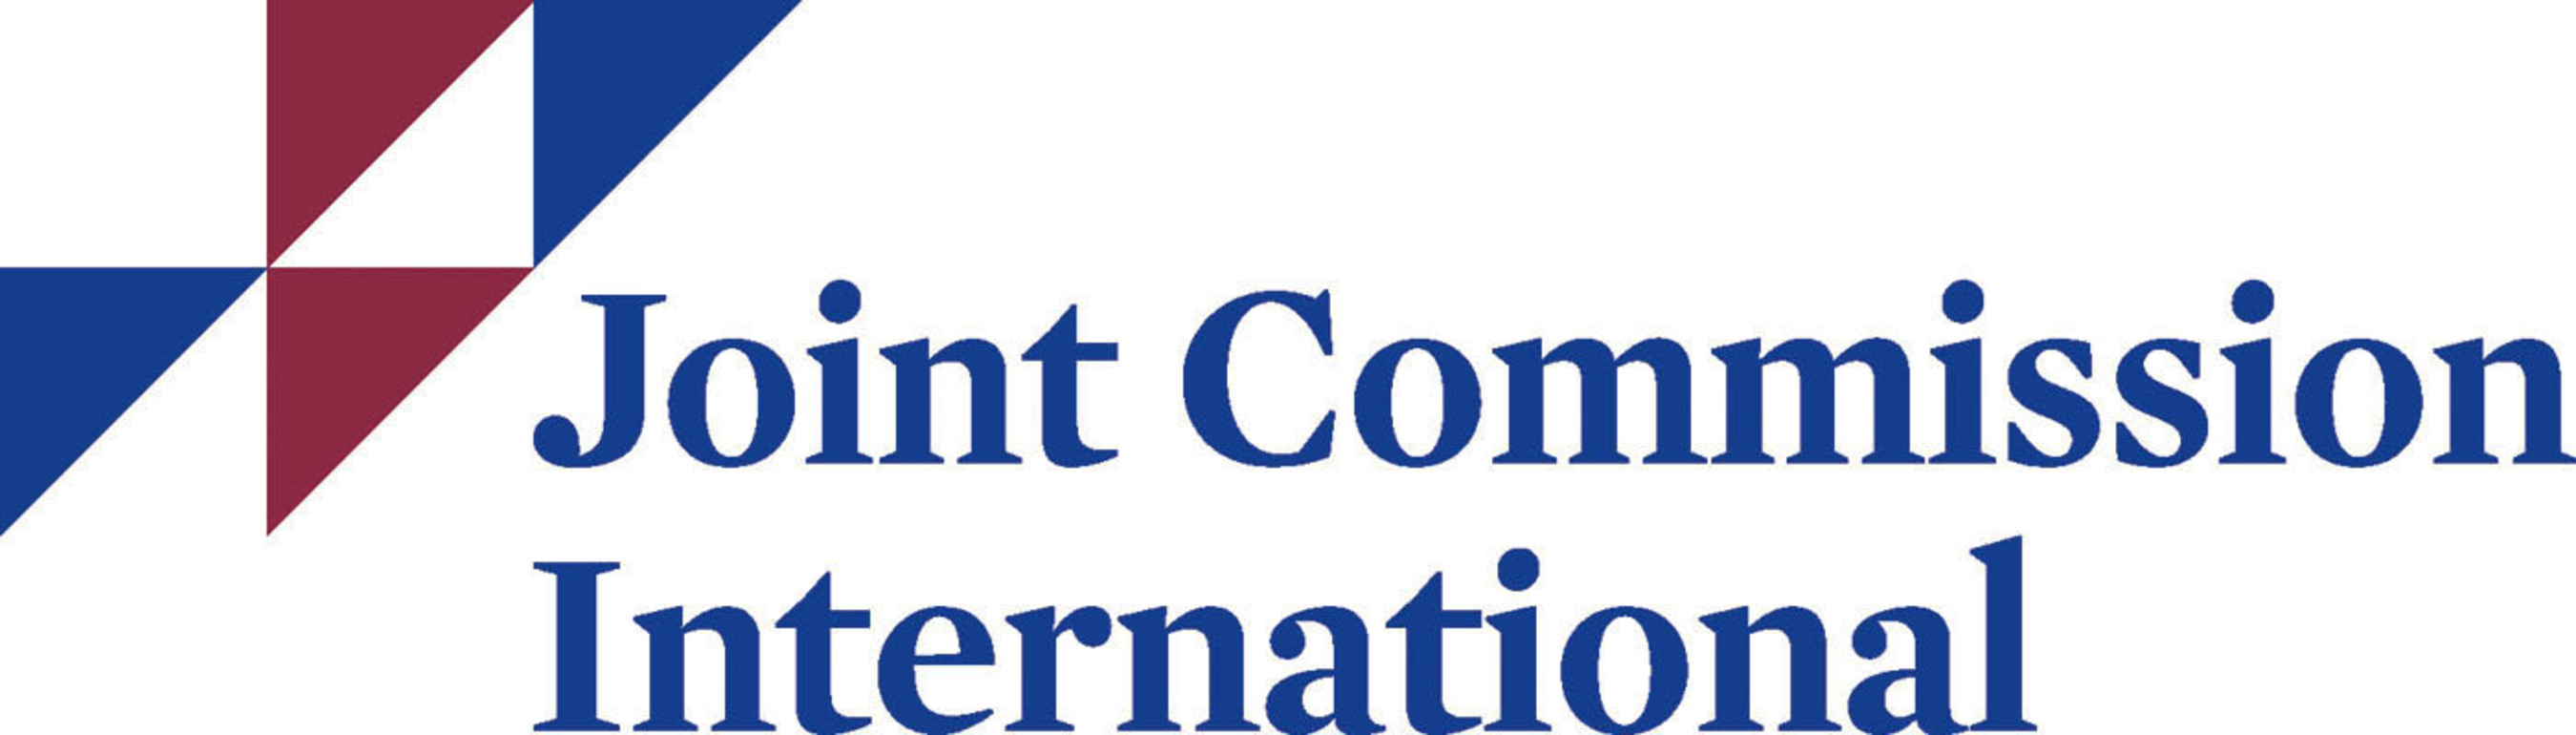 Joint Commission International Logo. (PRNewsFoto/Joint Commission International) (PRNewsFoto/)